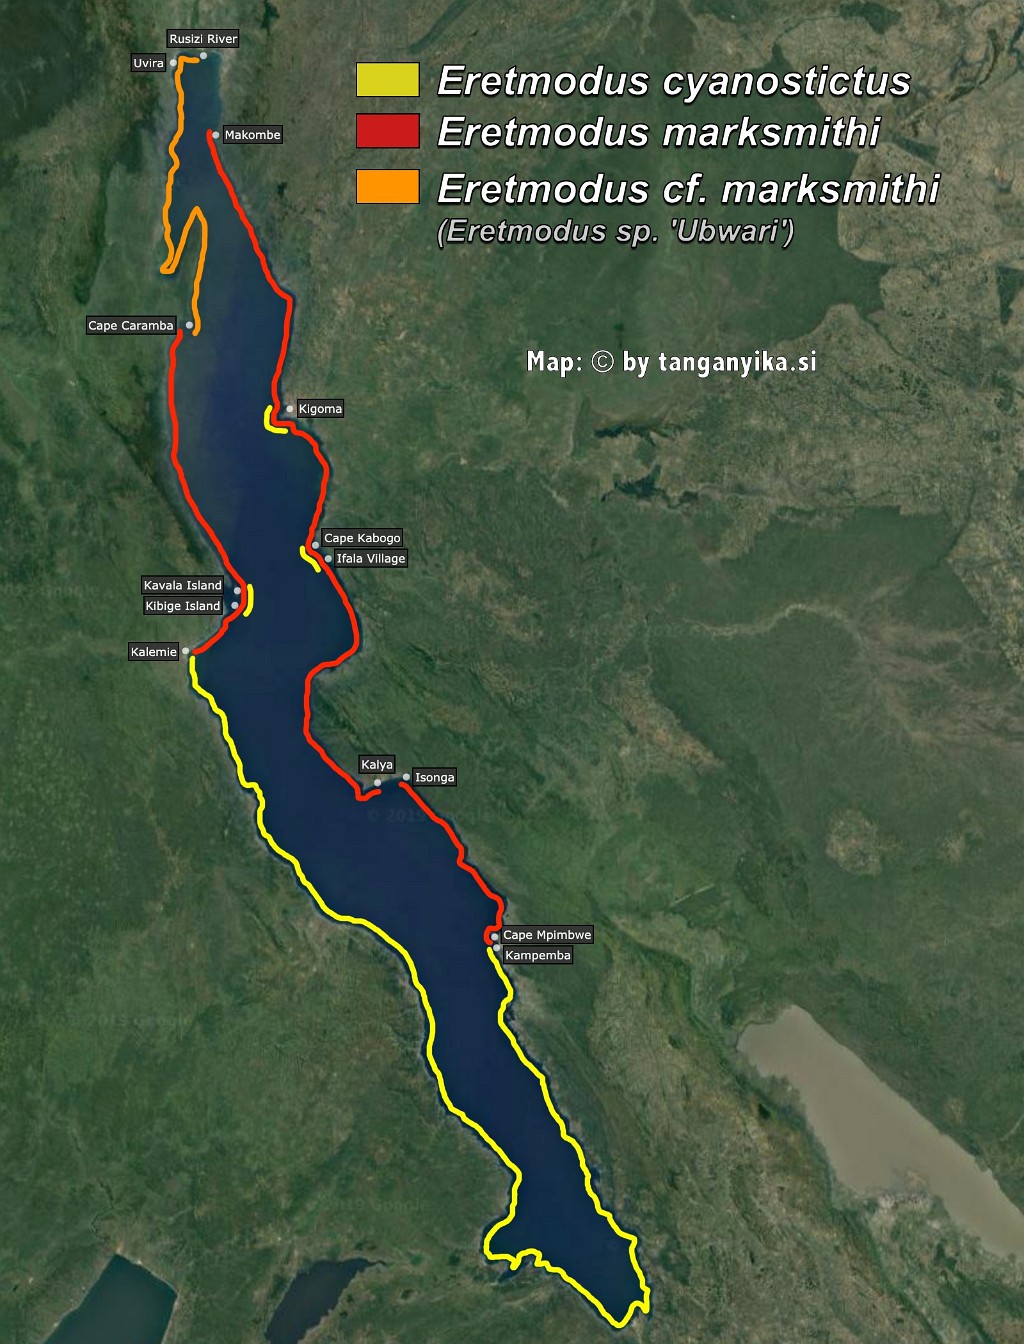 Eretmodus distribution map by tanganyika.si